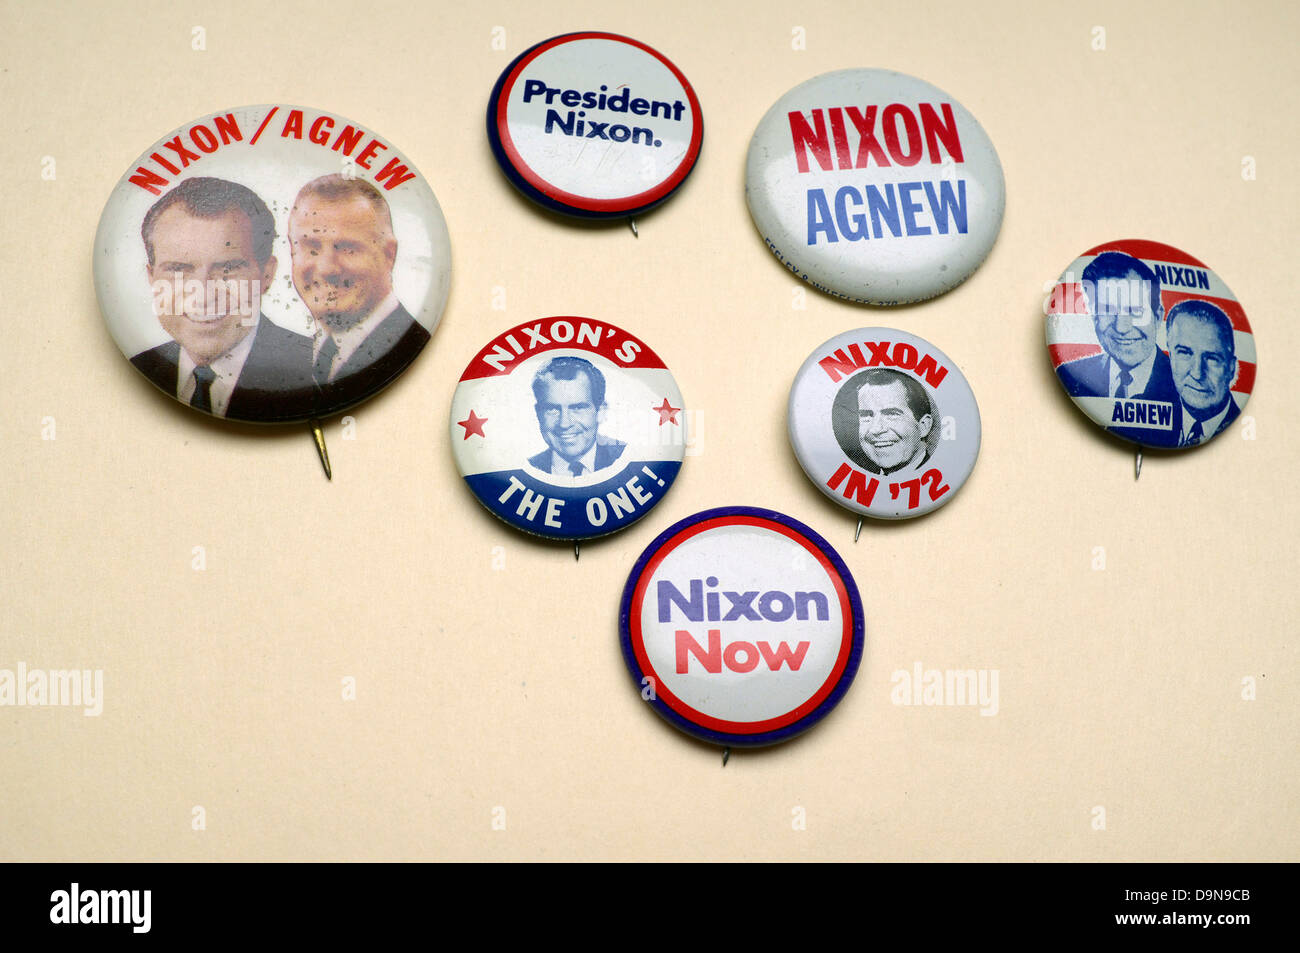 1972 Presidential Election Pin Richard Nixon and Agnew Vote Republican Campaign 